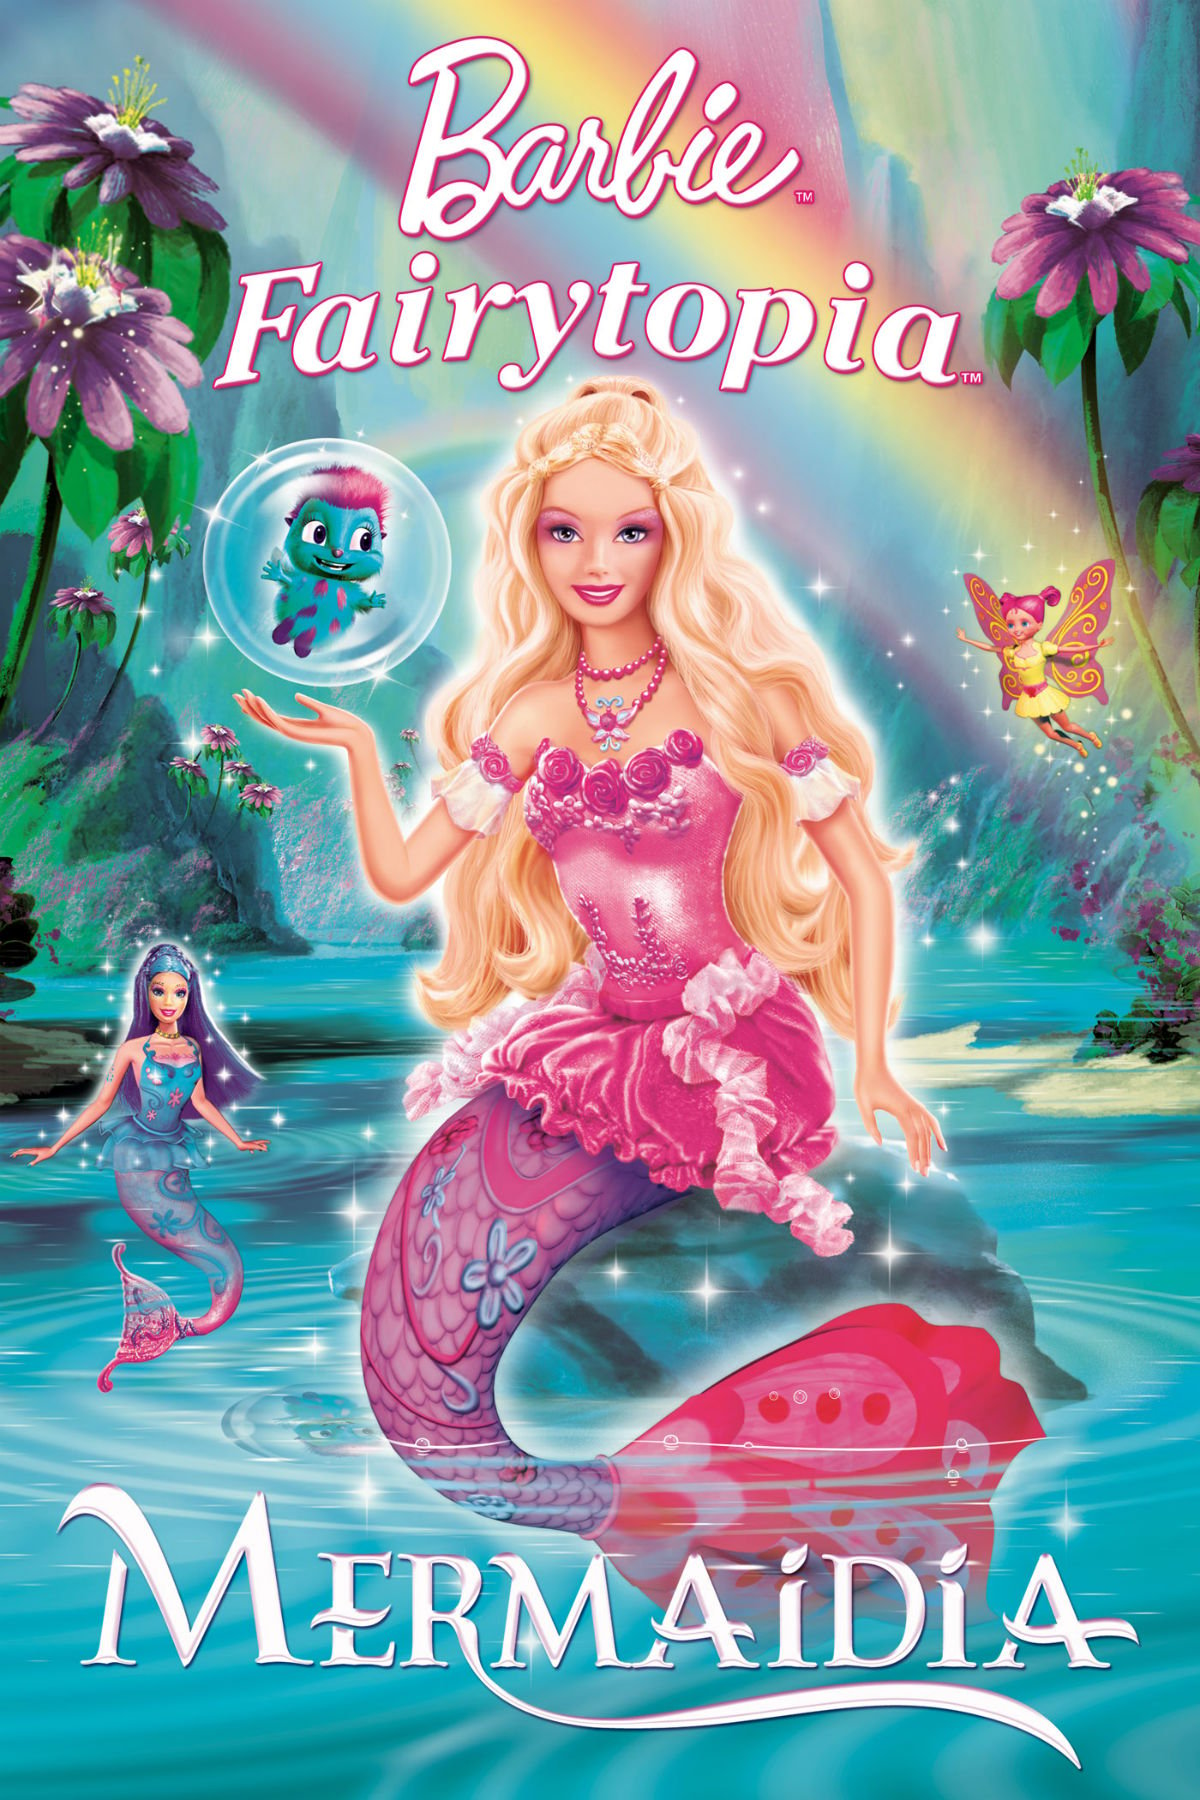 altura Amplificar Salto Barbie Fairytopia: Mermaidia - Película 2006 - SensaCine.com